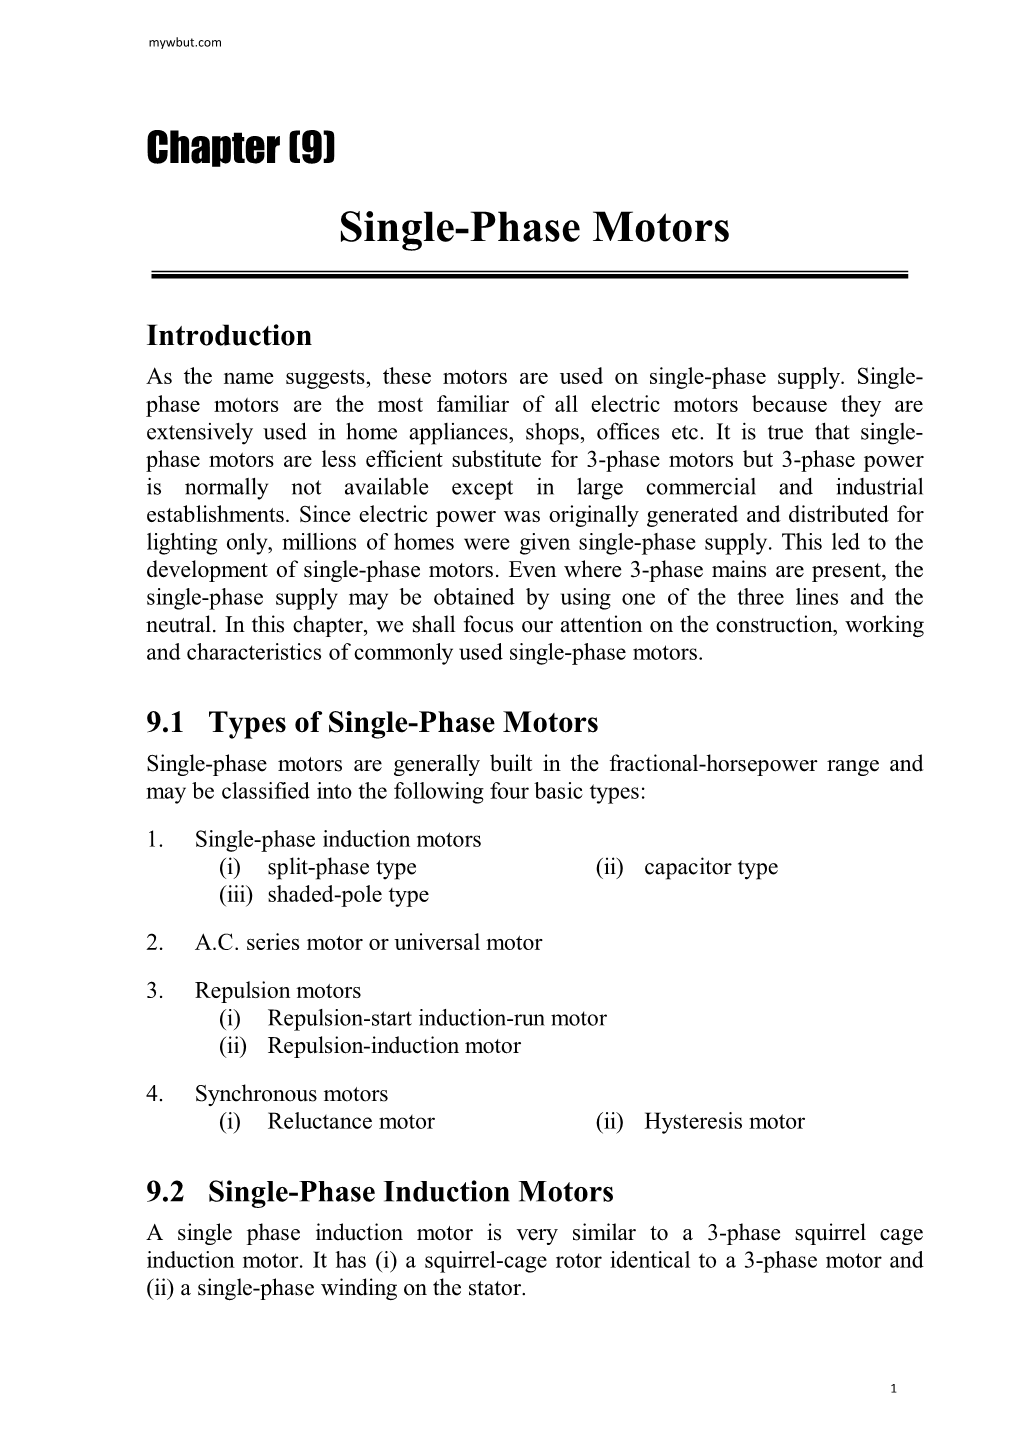 Single-Phase Motors